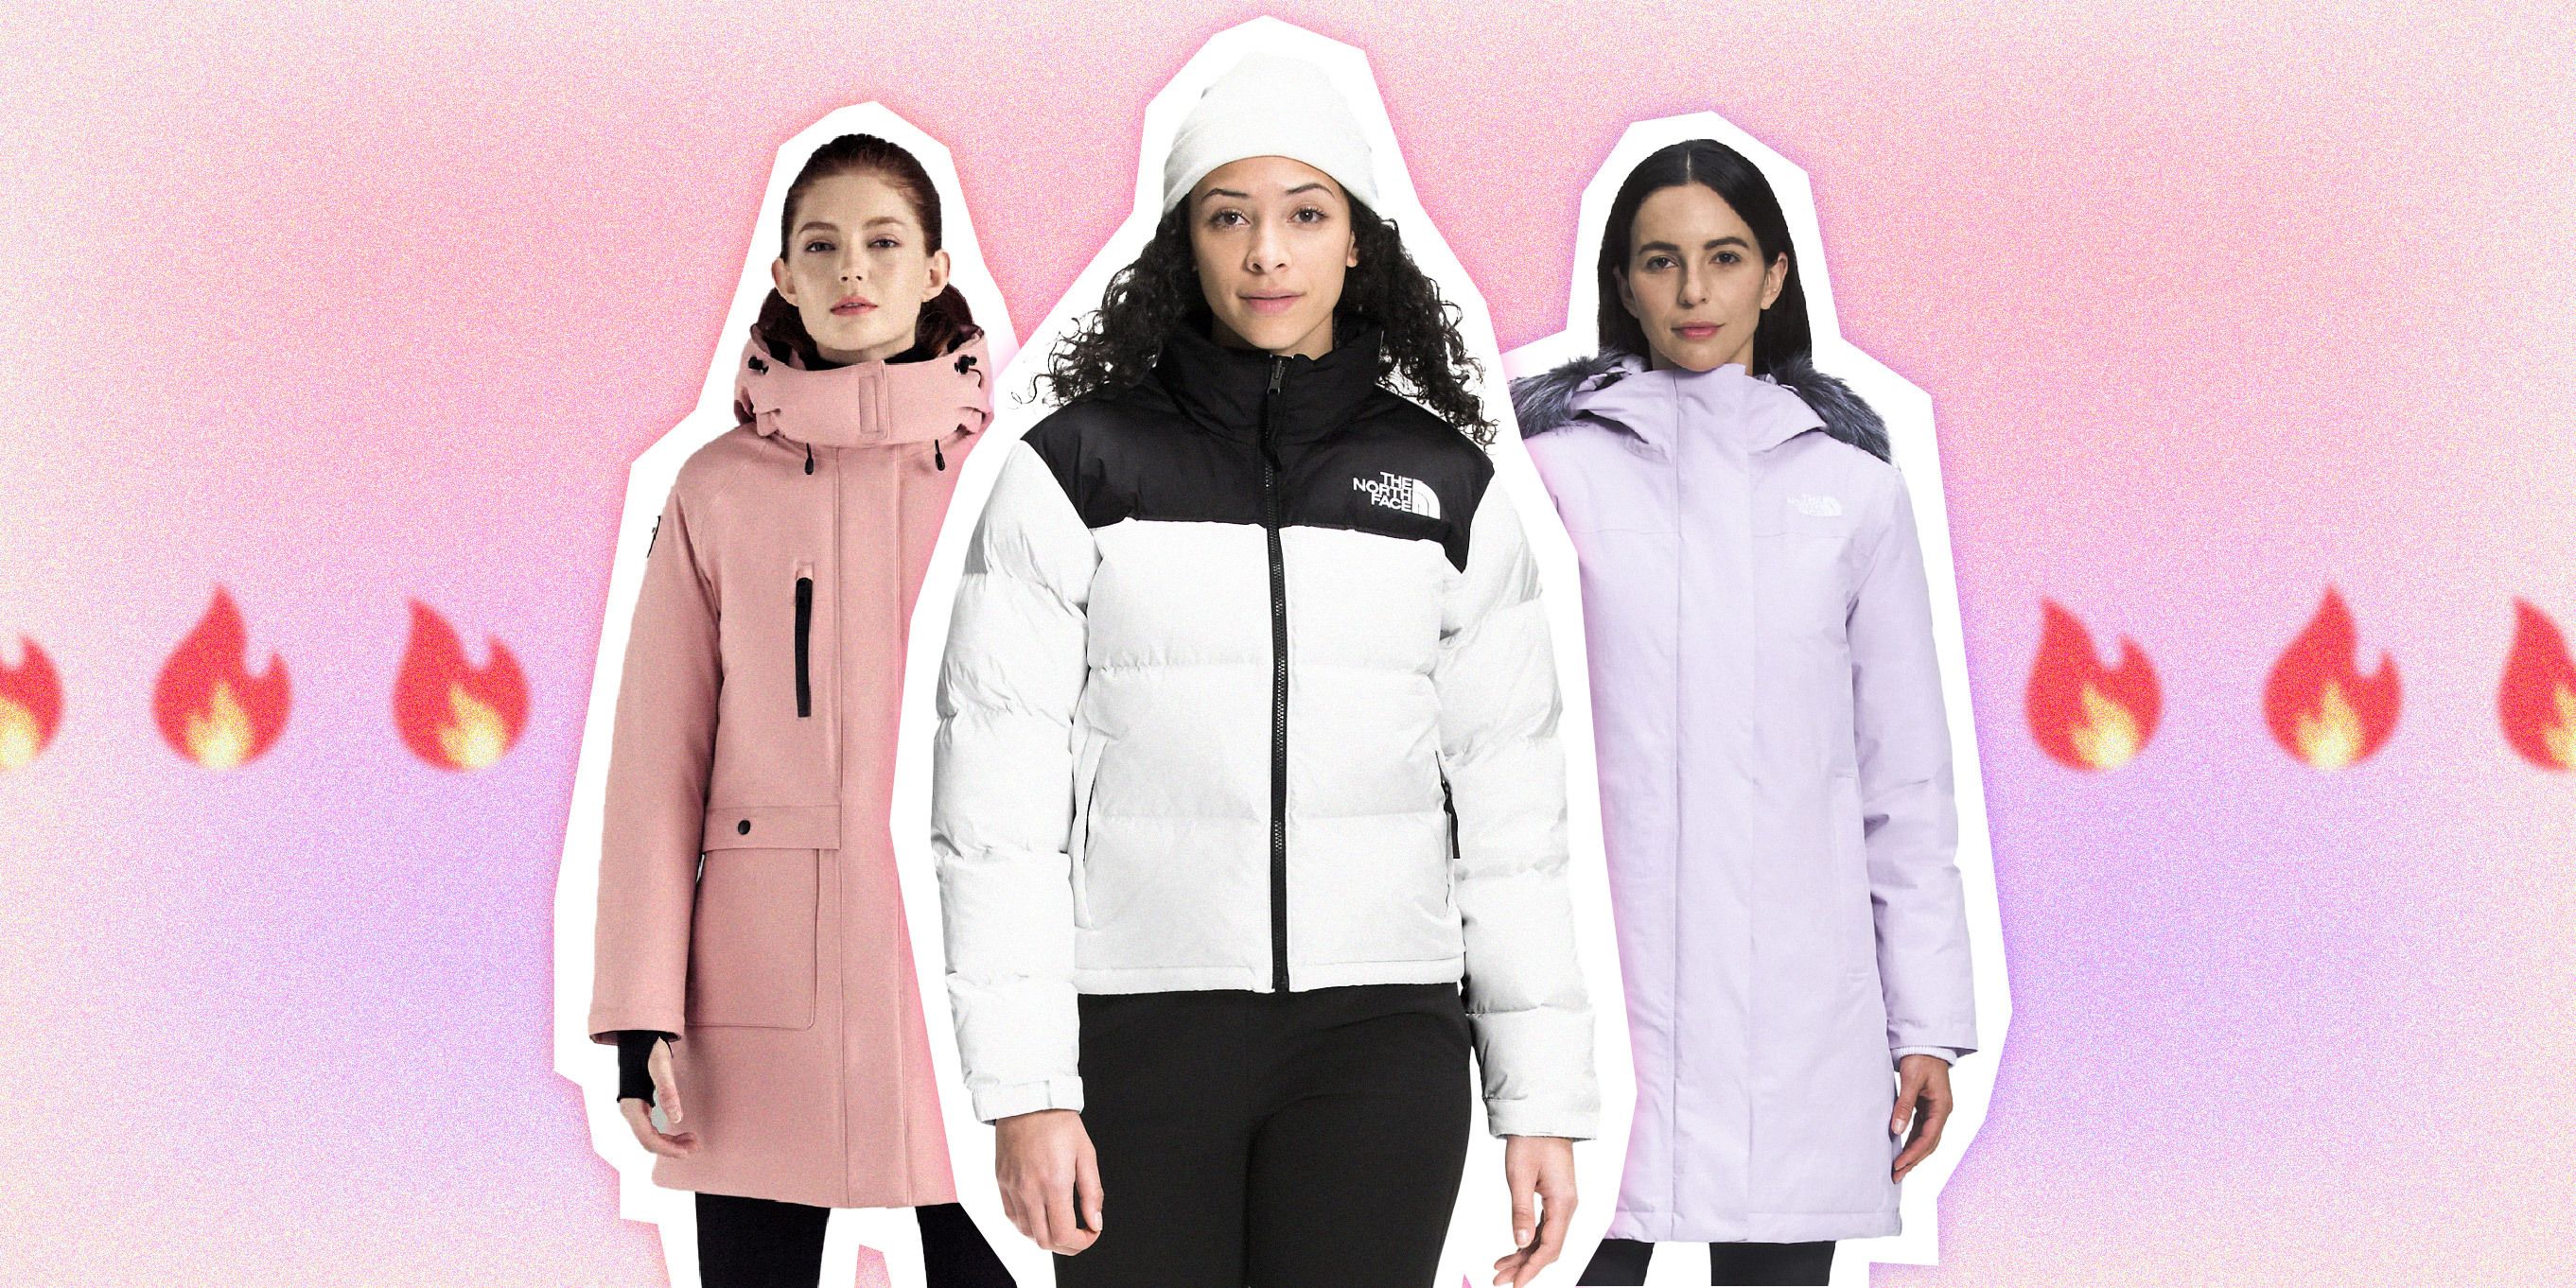 14 Warmest Winter Coats - Best Warm Winter Jackets And Puffers